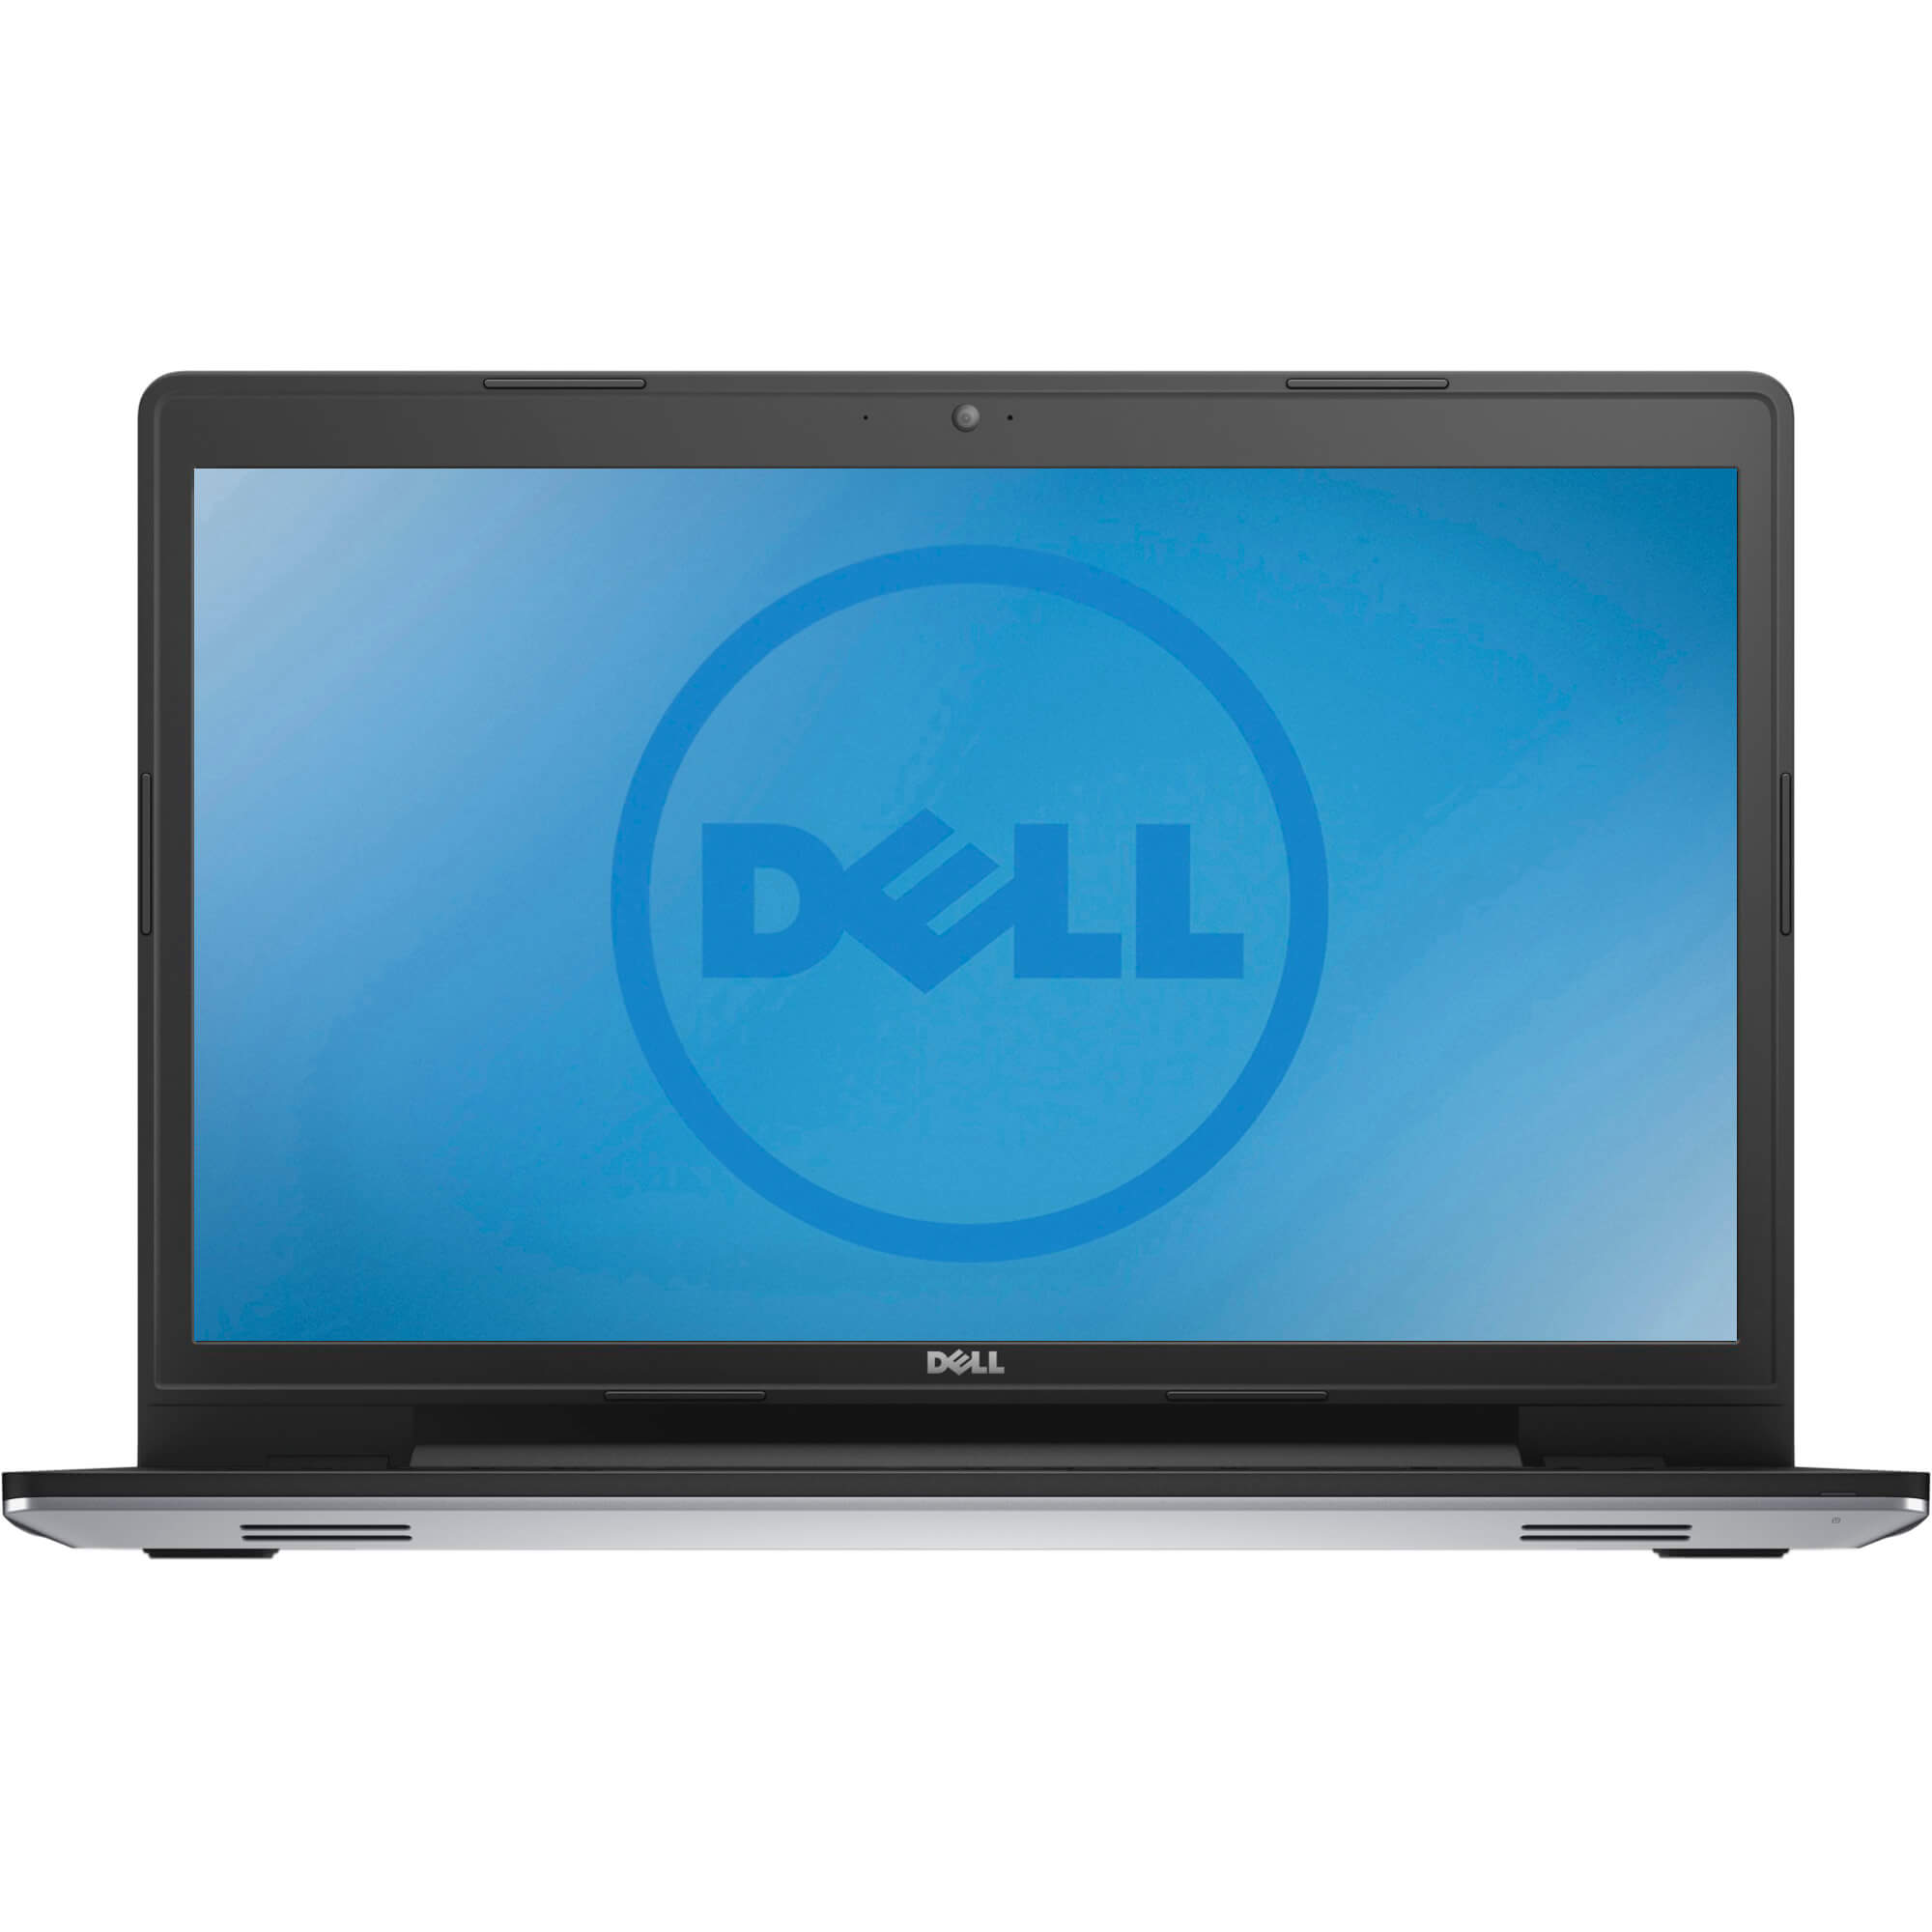  Laptop Dell Inspiron 5749, Intel Core i5-5200U, 8GB DDR3, HDD 1TB, nVidia GeForce 840M 2GB, Linux 